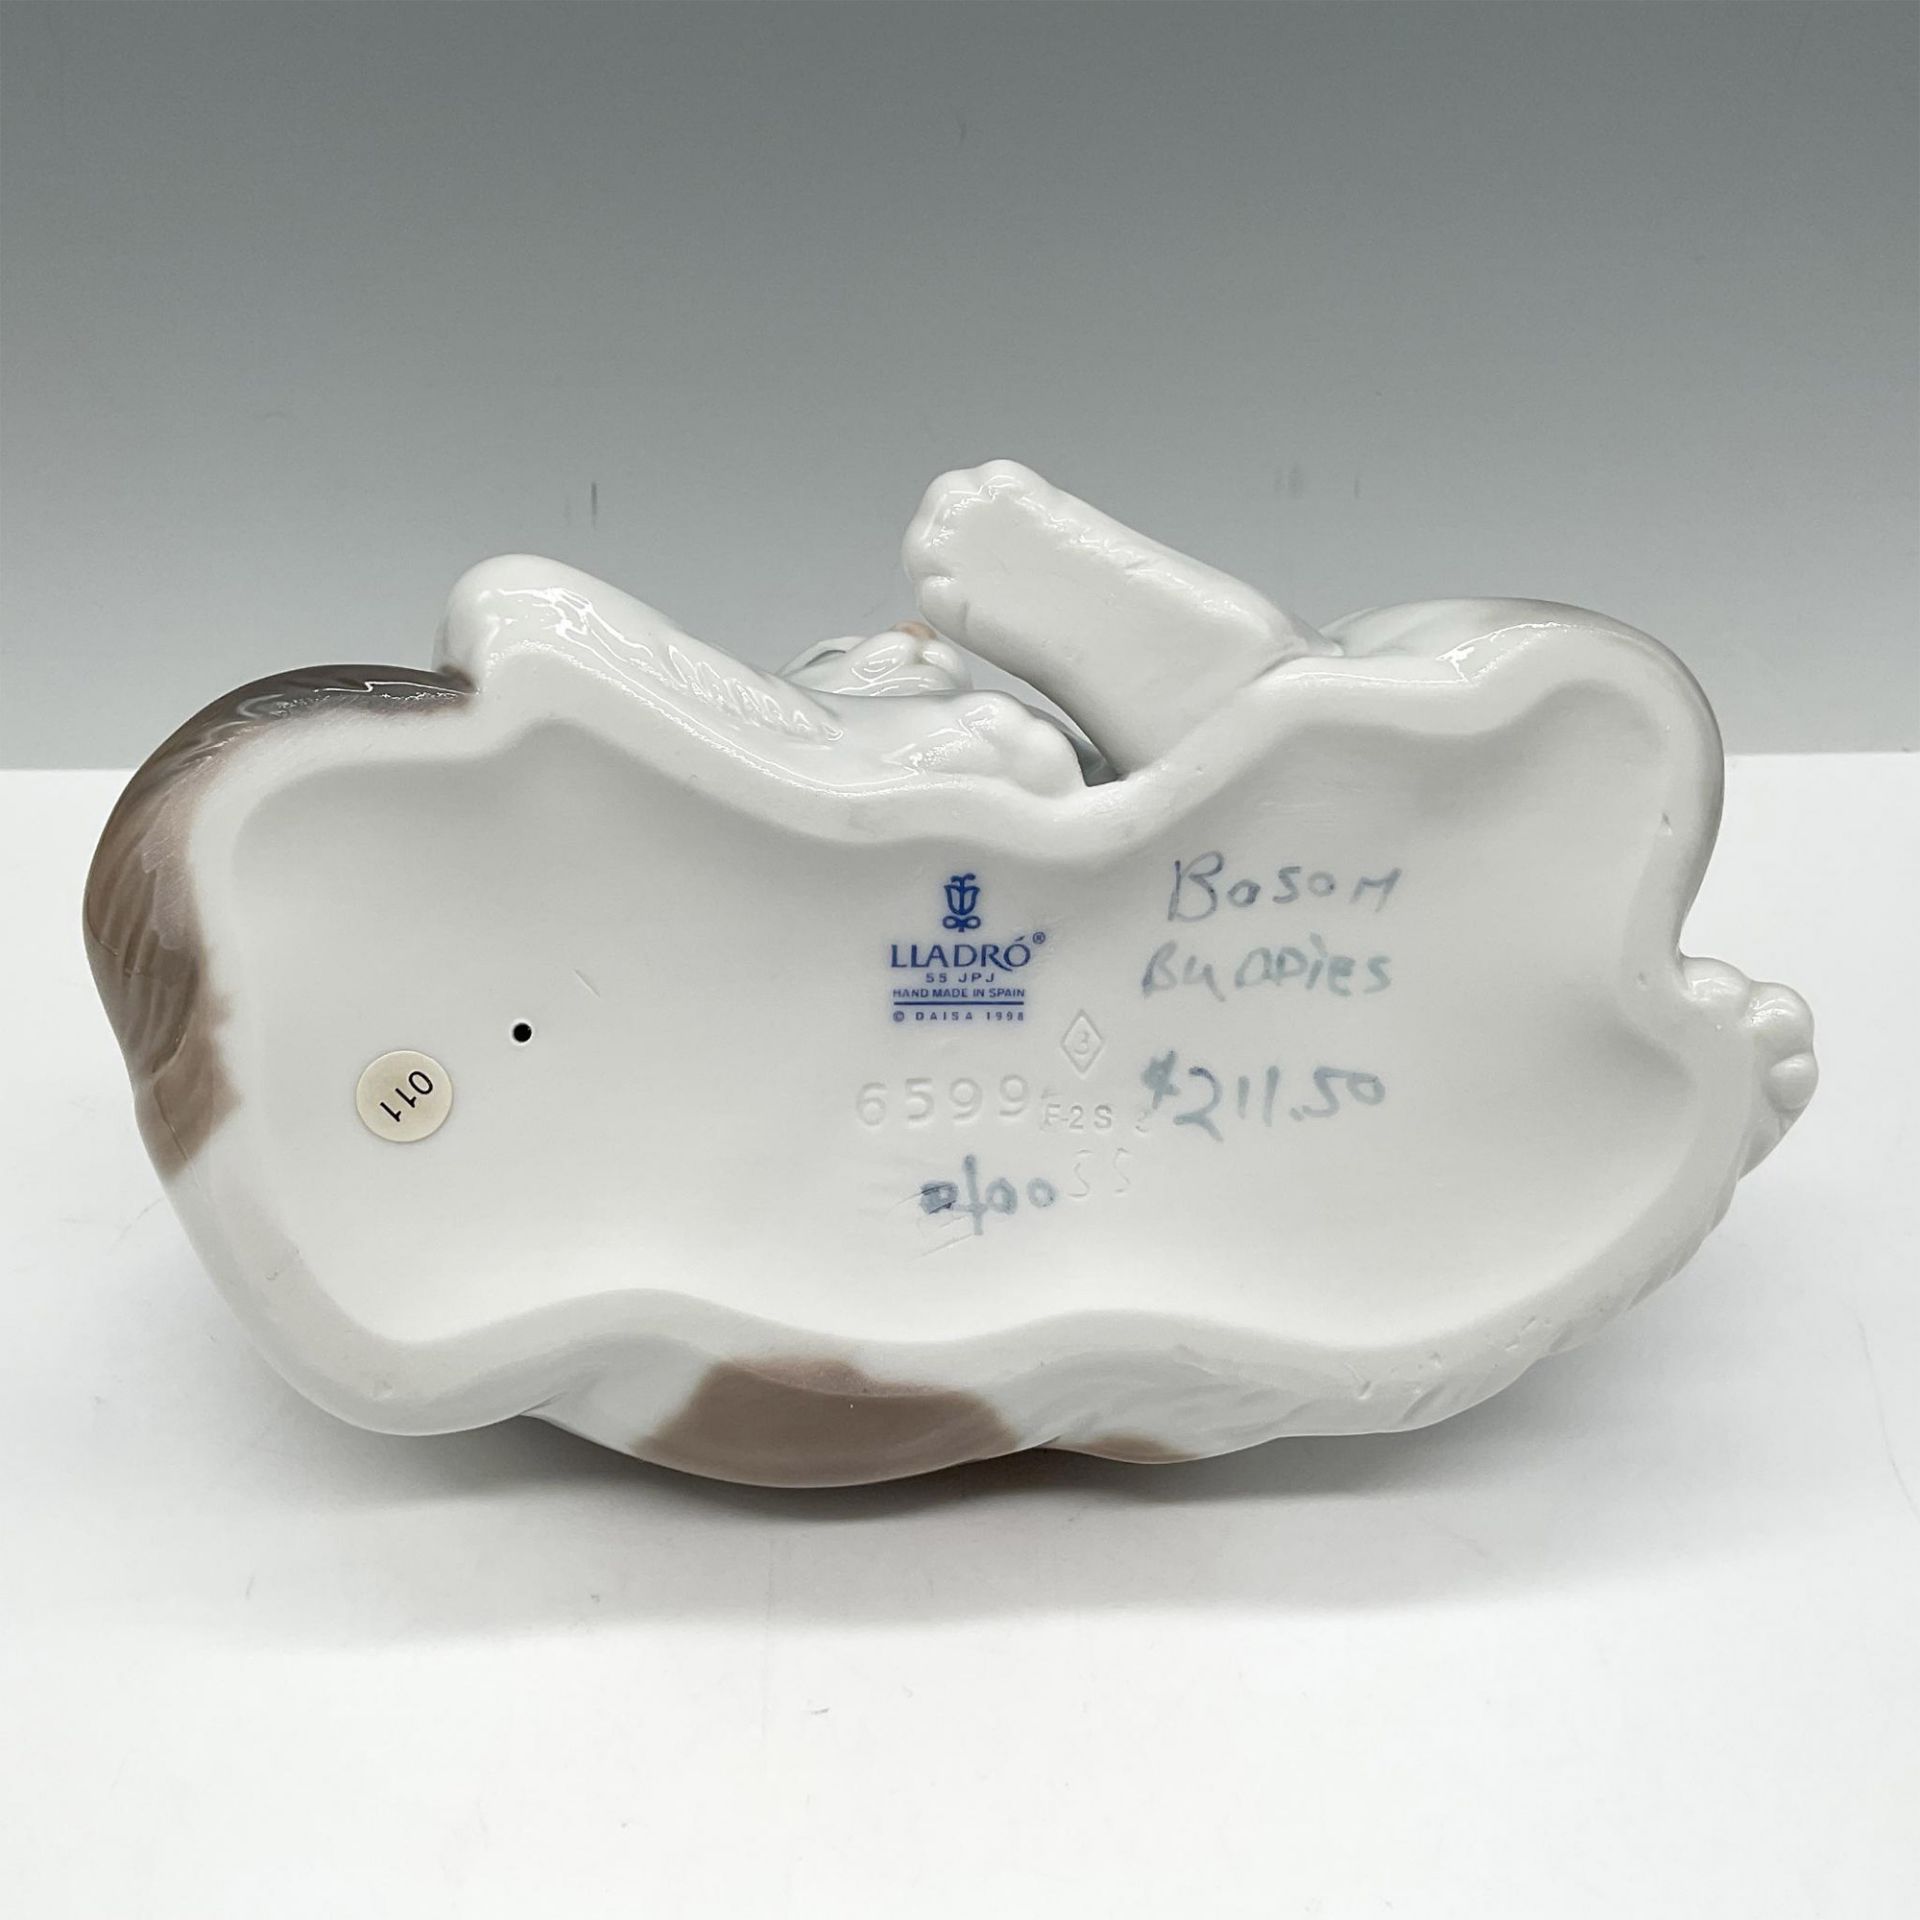 Bosom Buddies 1006599 - Lladro Porcelain Figurine - Image 3 of 3